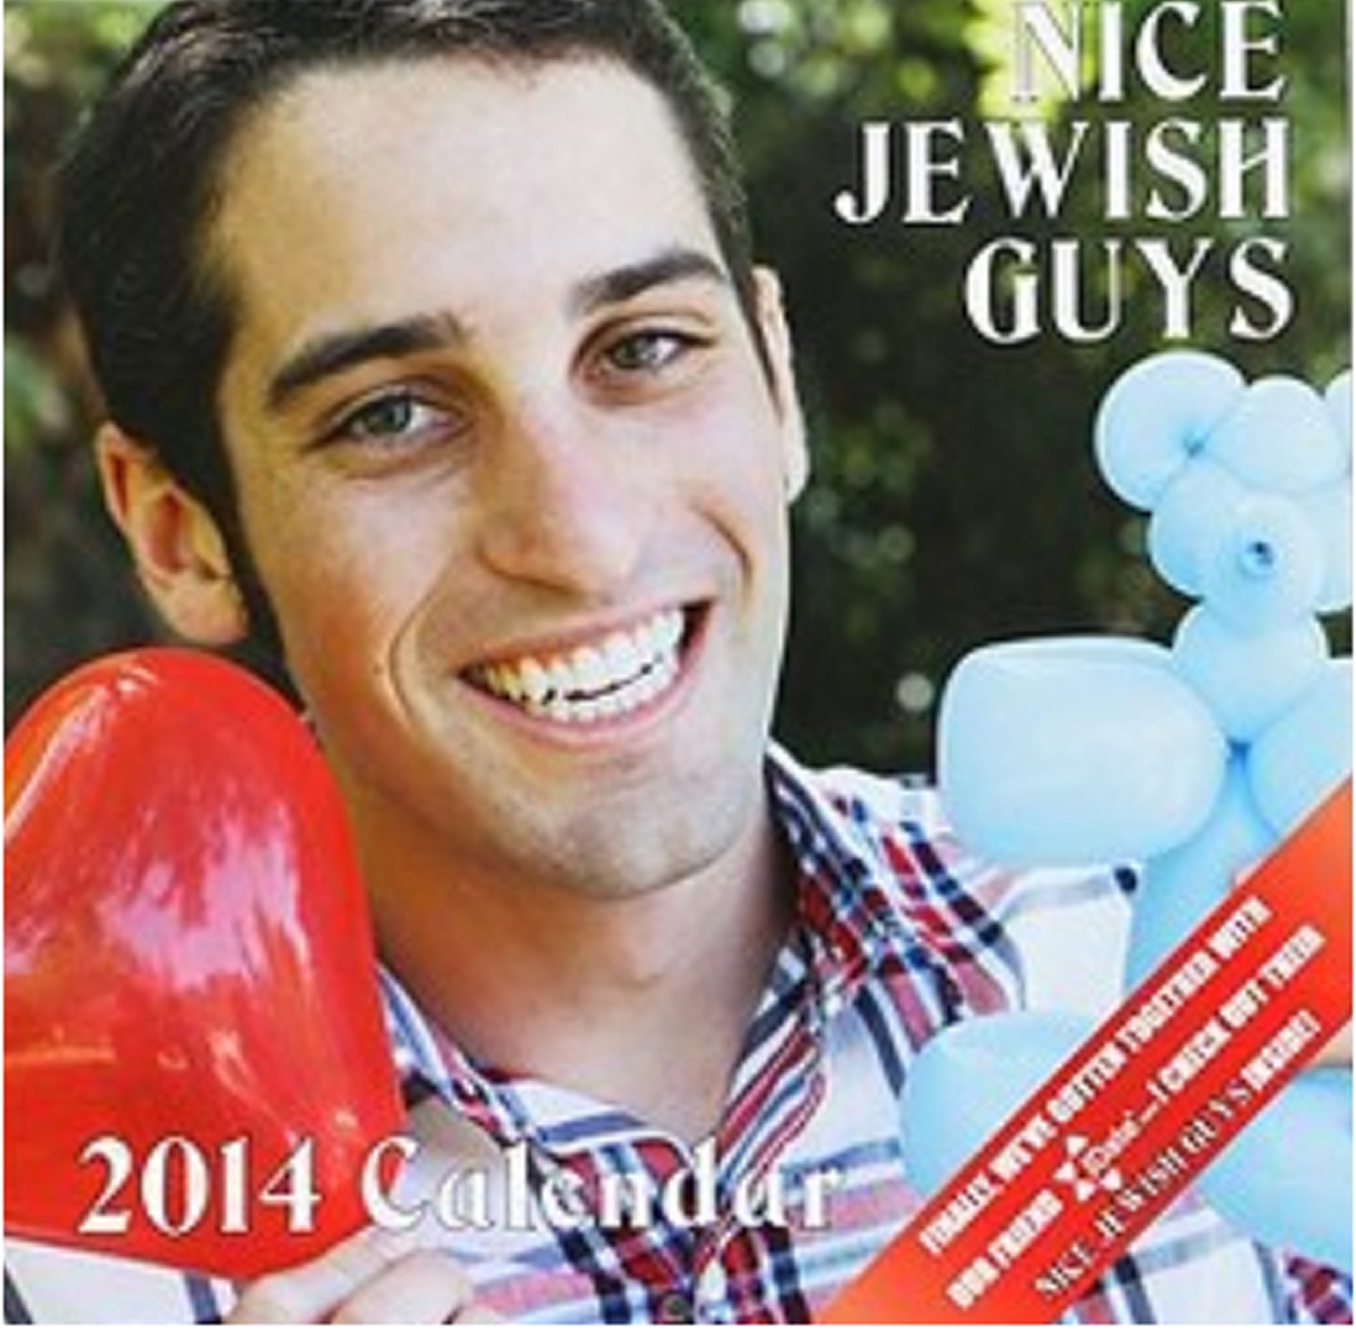 Hot Jewish Guys-Craziest Calendars For 2014